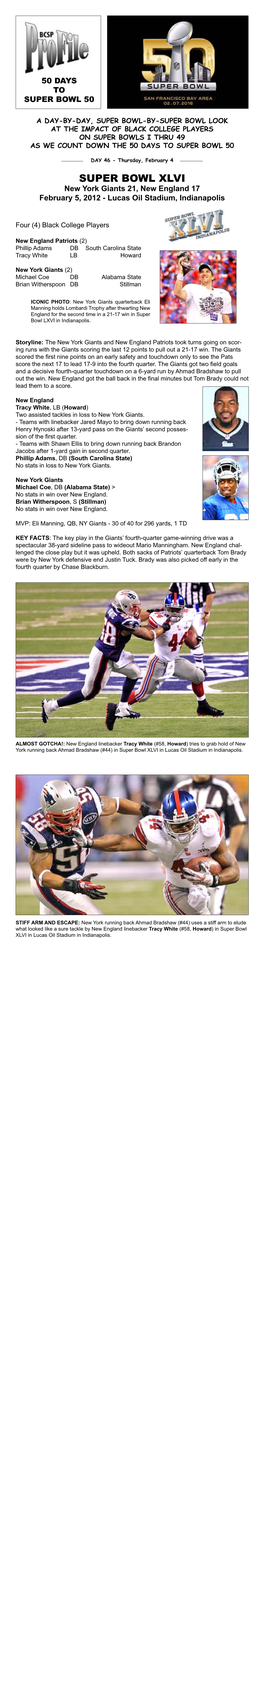 Super Bowl XLVI New York Giants 21, New England 17 February 5, 2012 - Lucas Oil Stadium, Indianapolis